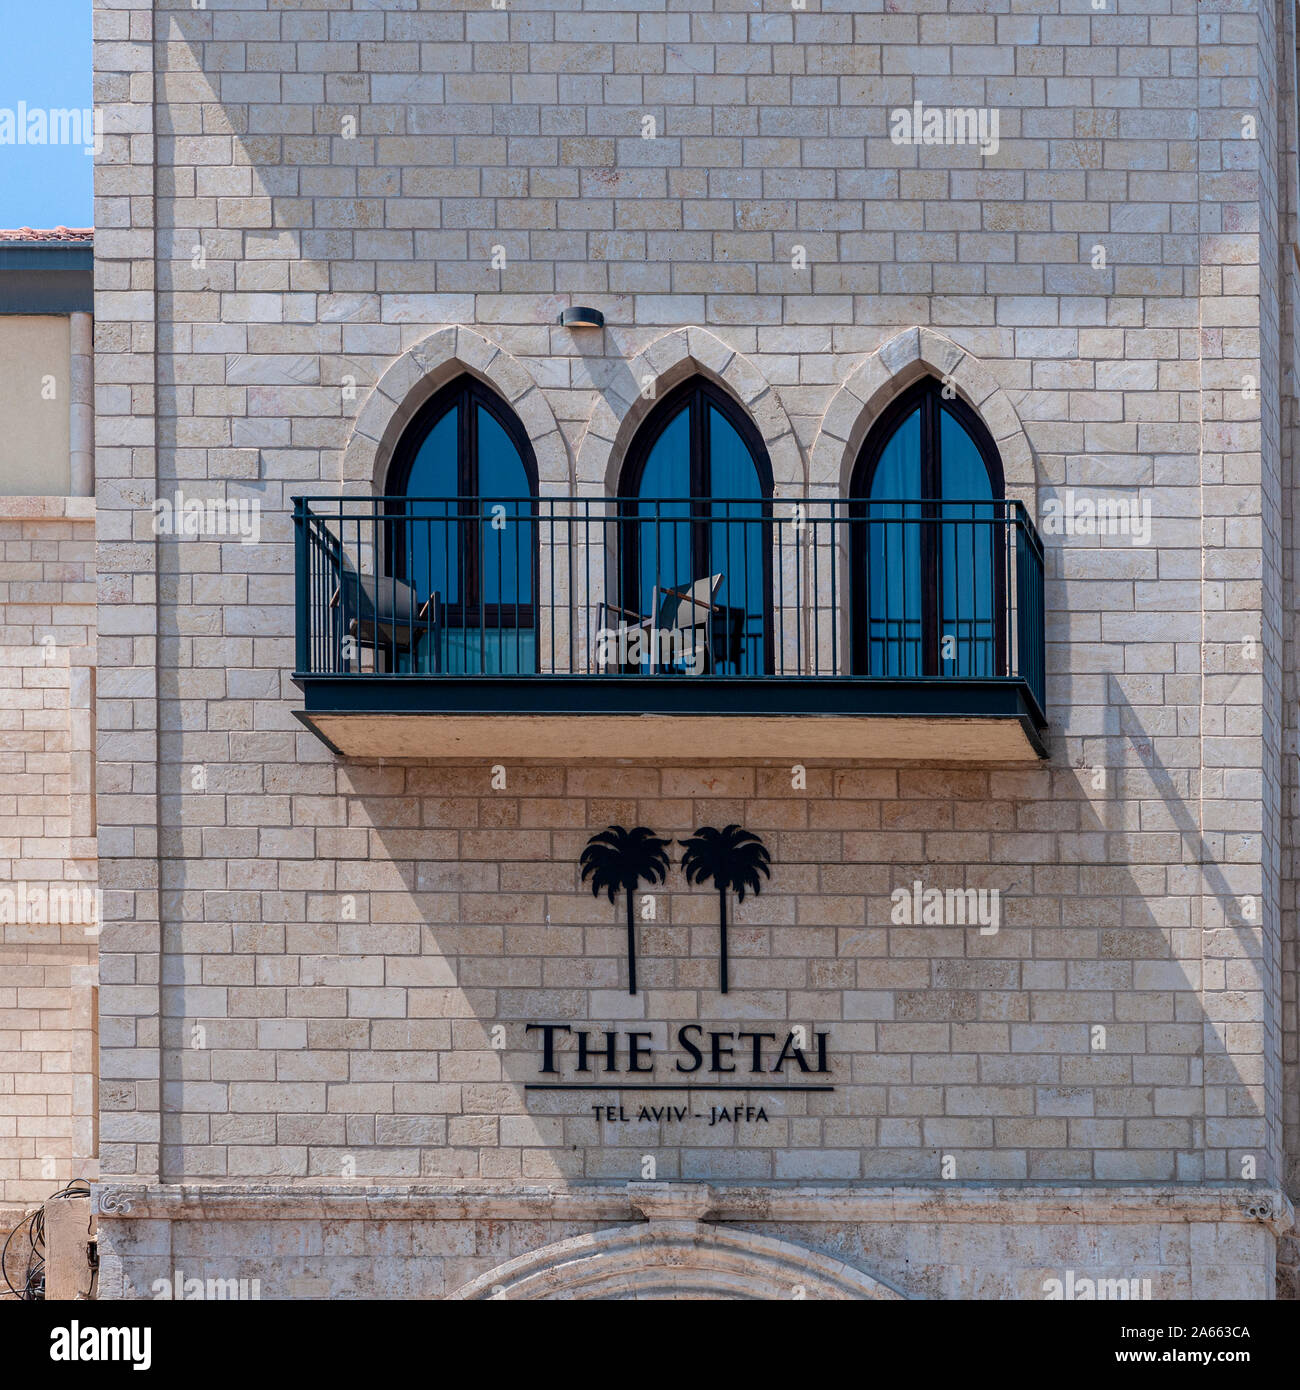 The Setai hotel in Jaffa Foto stock - Alamy